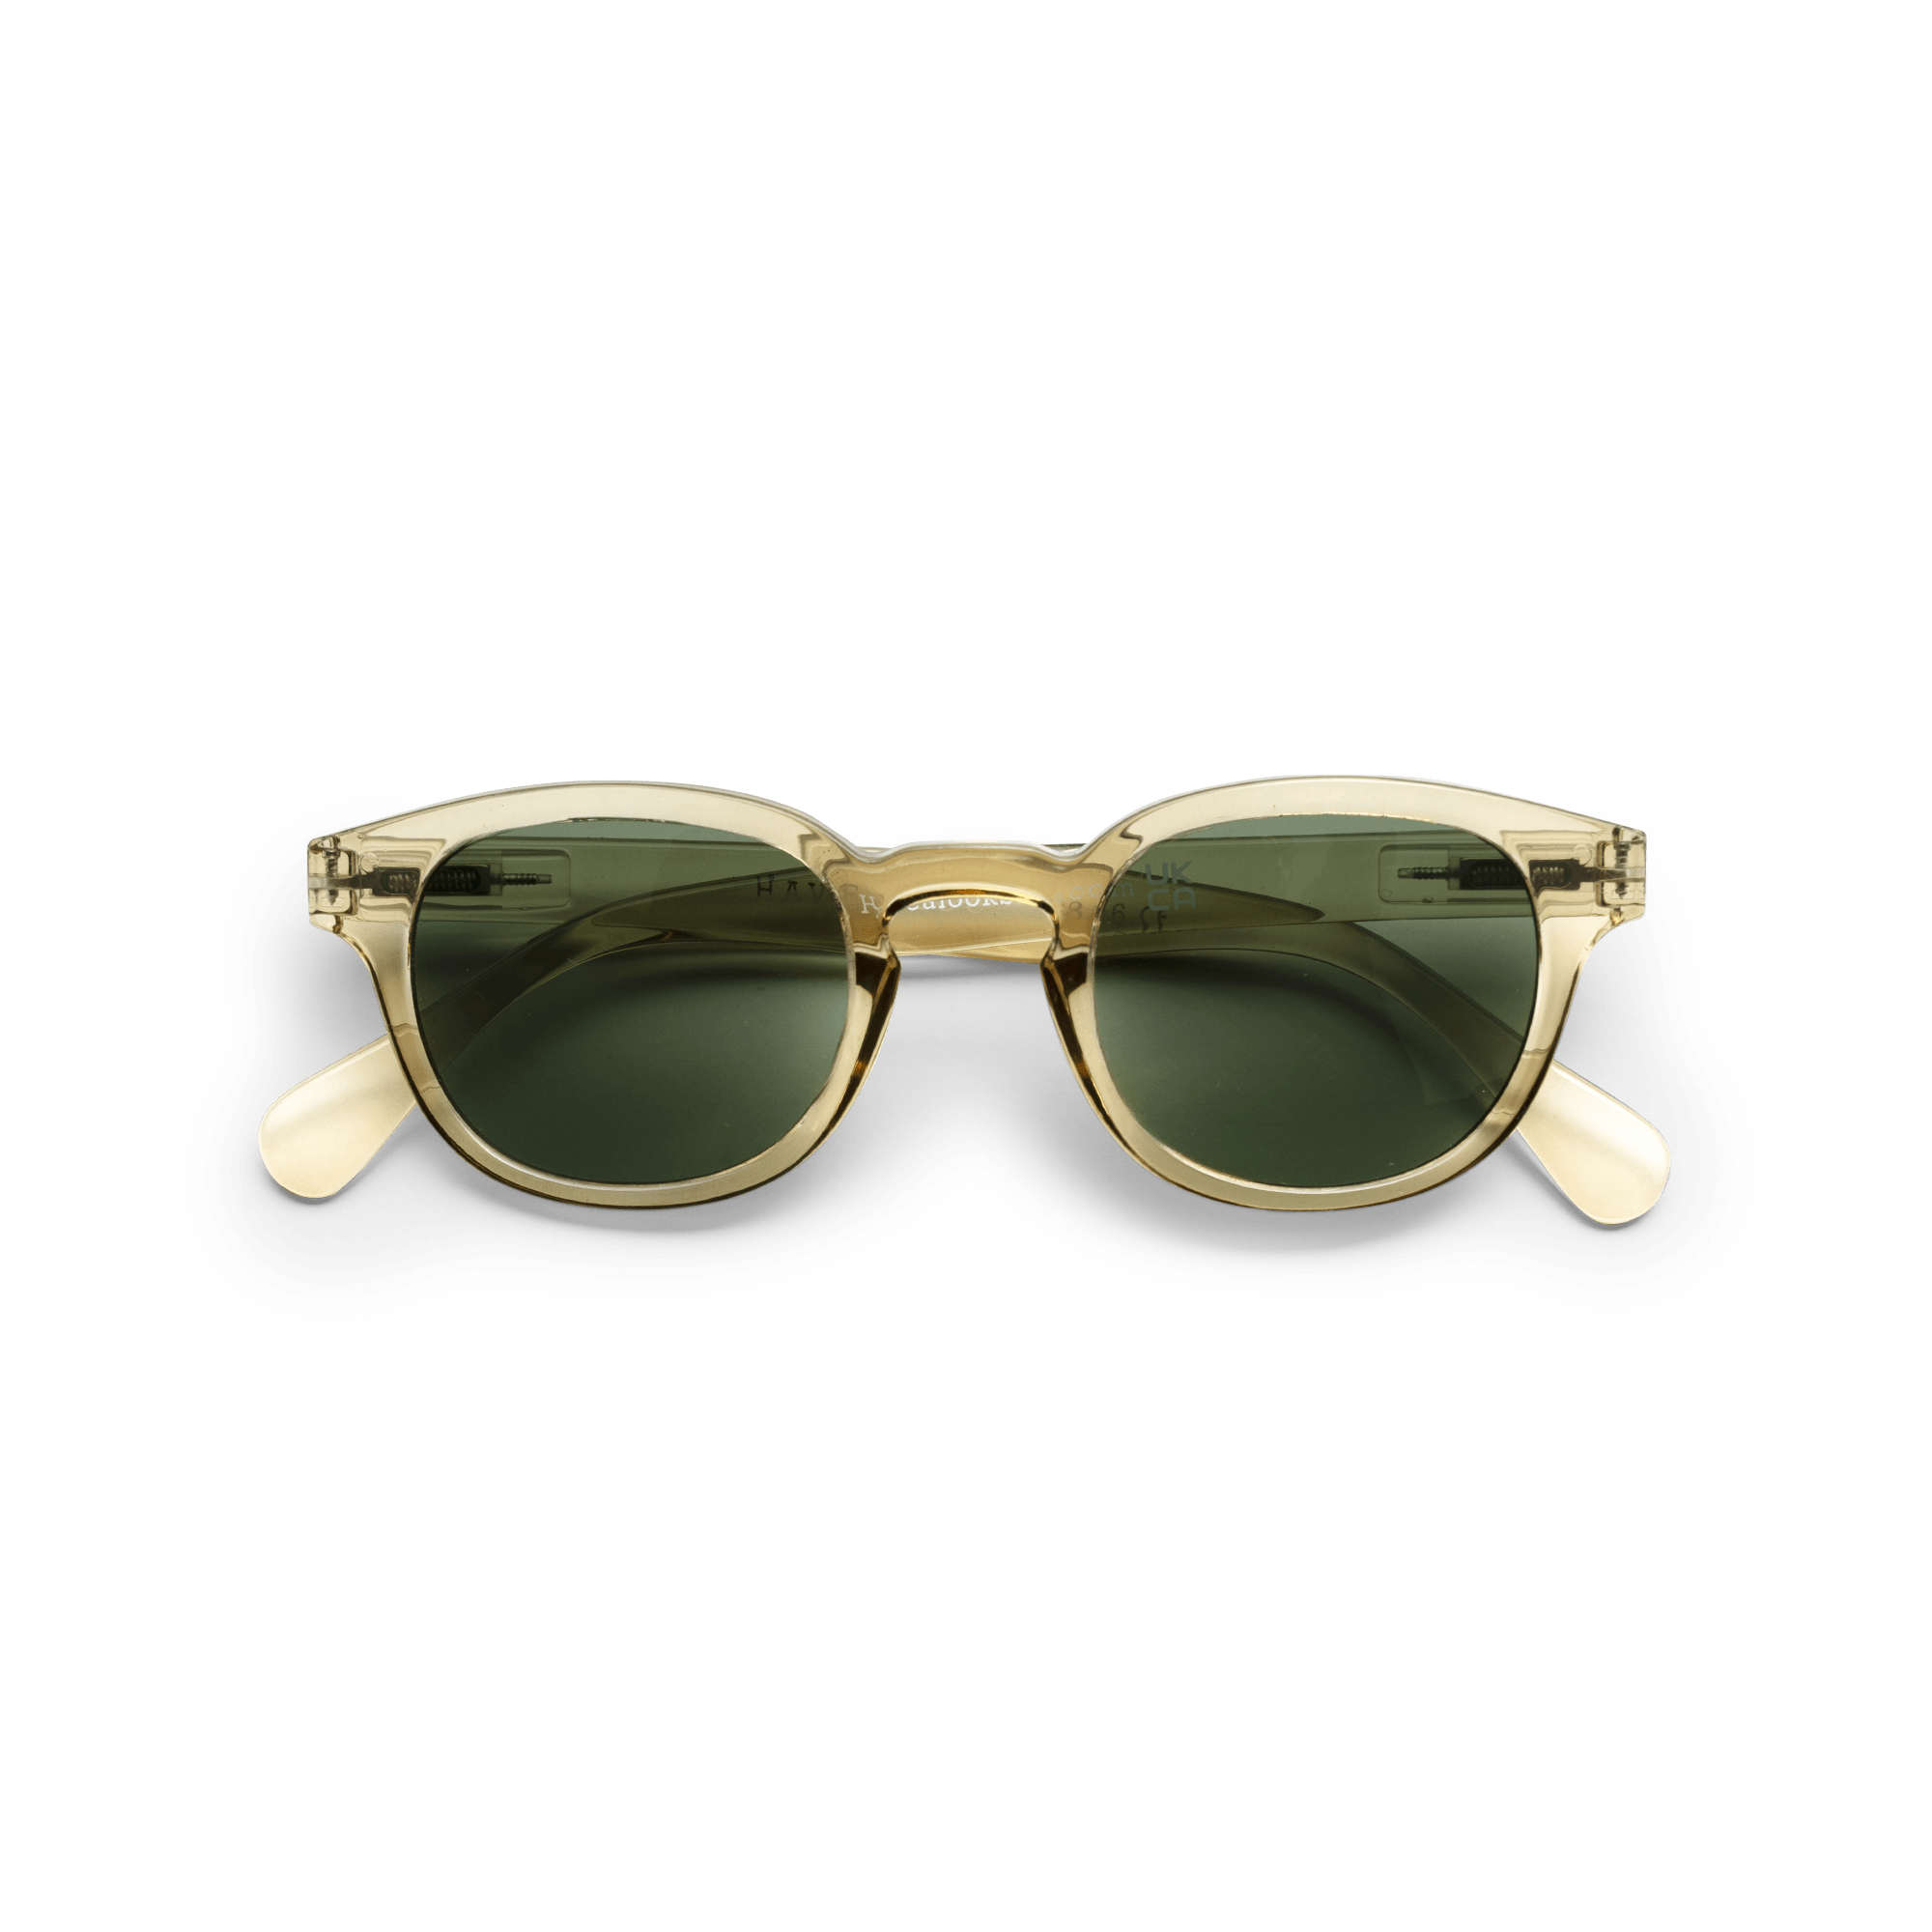 Sunglasses Type C - olive